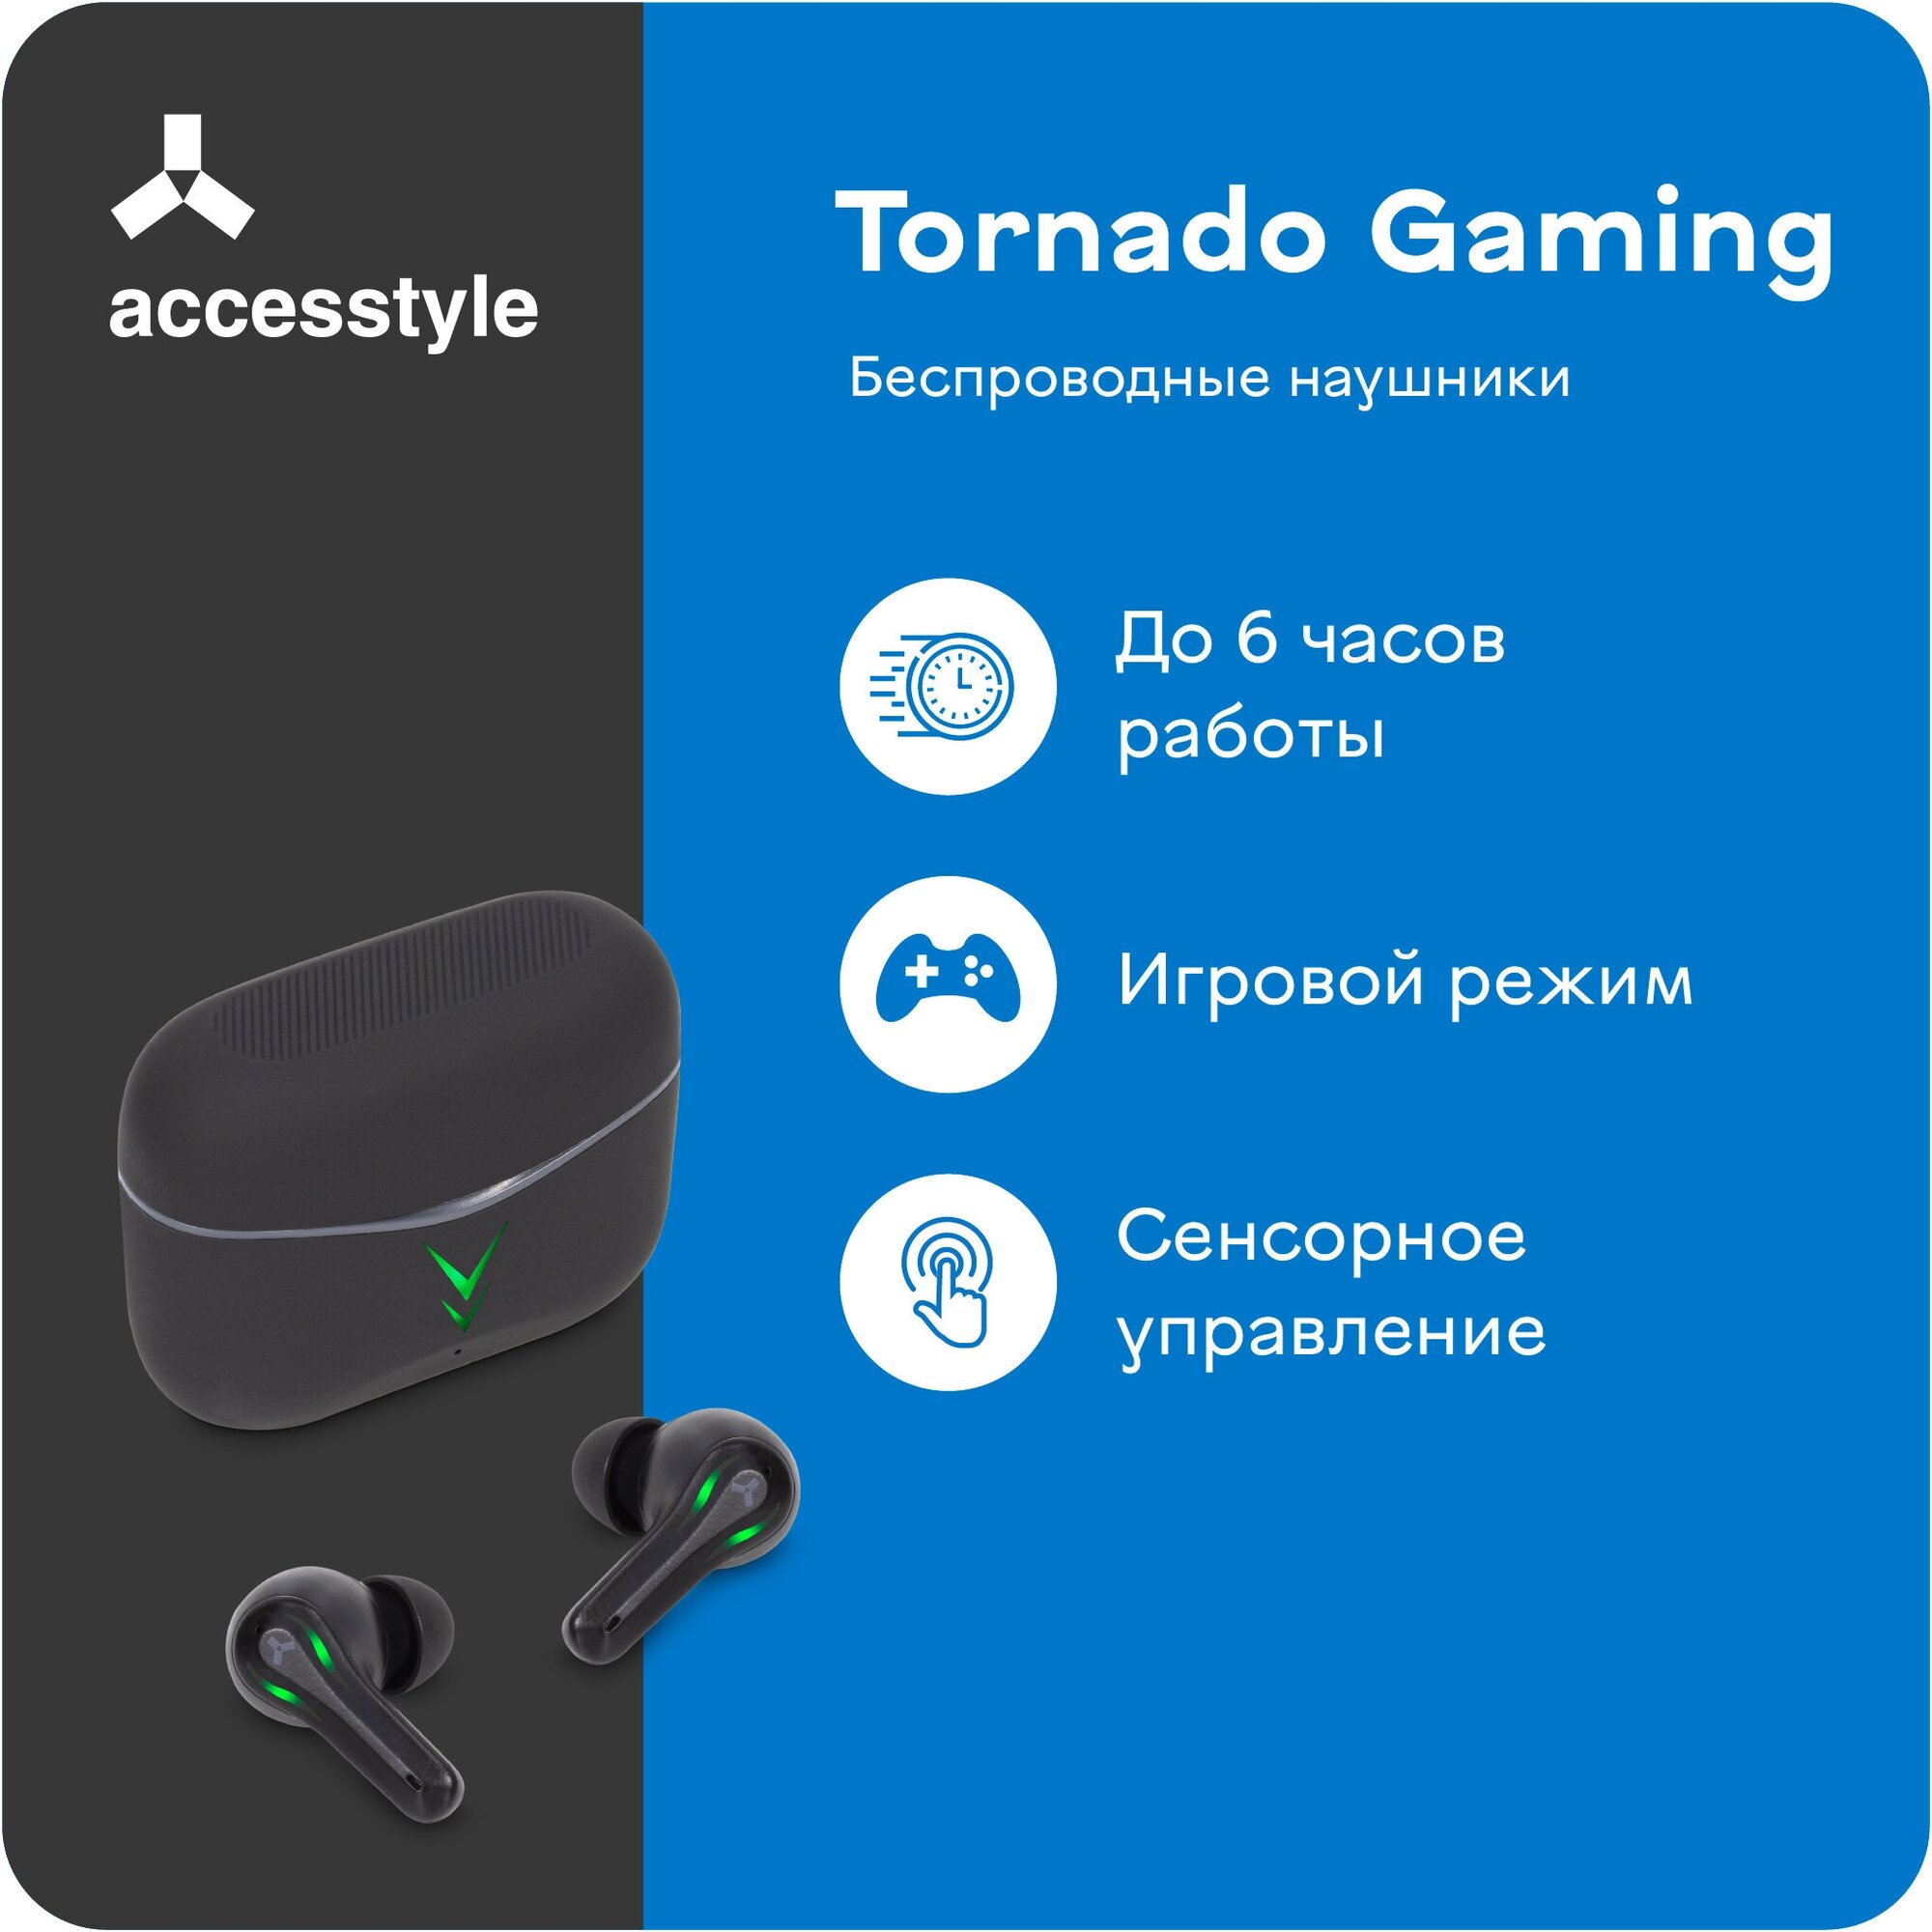 Гарнитура ACCESSTYLE Tornado Gaming, Bluetooth, вкладыши, черный [tornado gaming black]